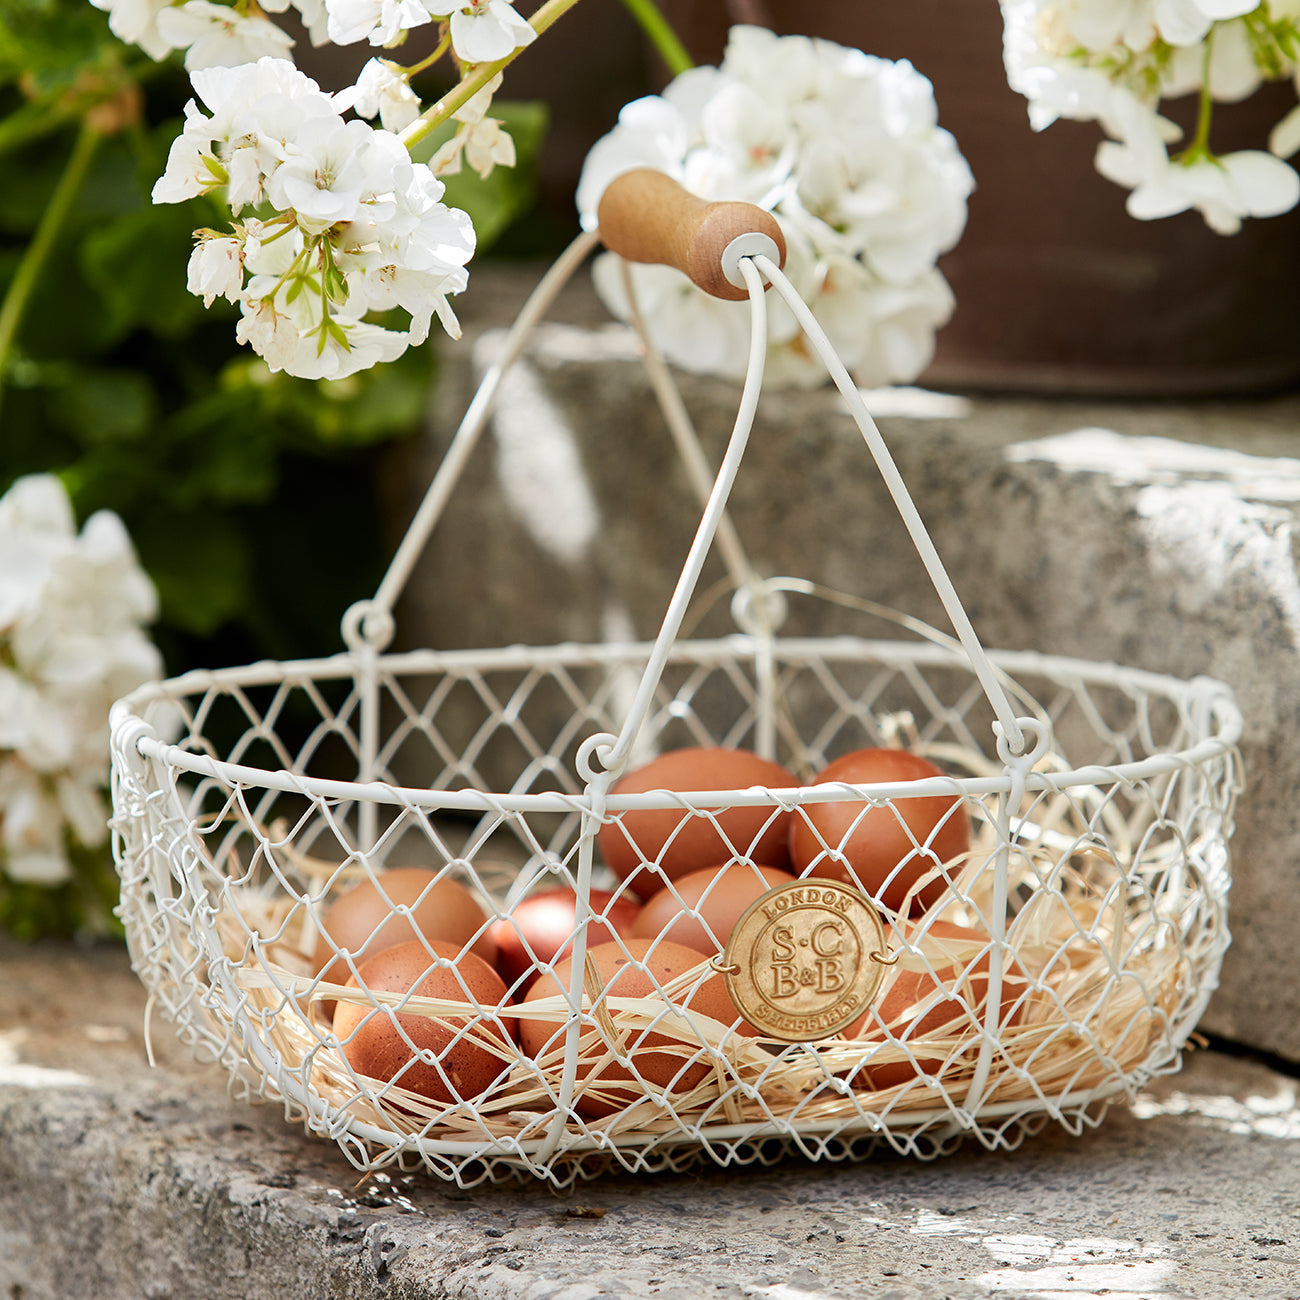 Garden Basket with Eggs